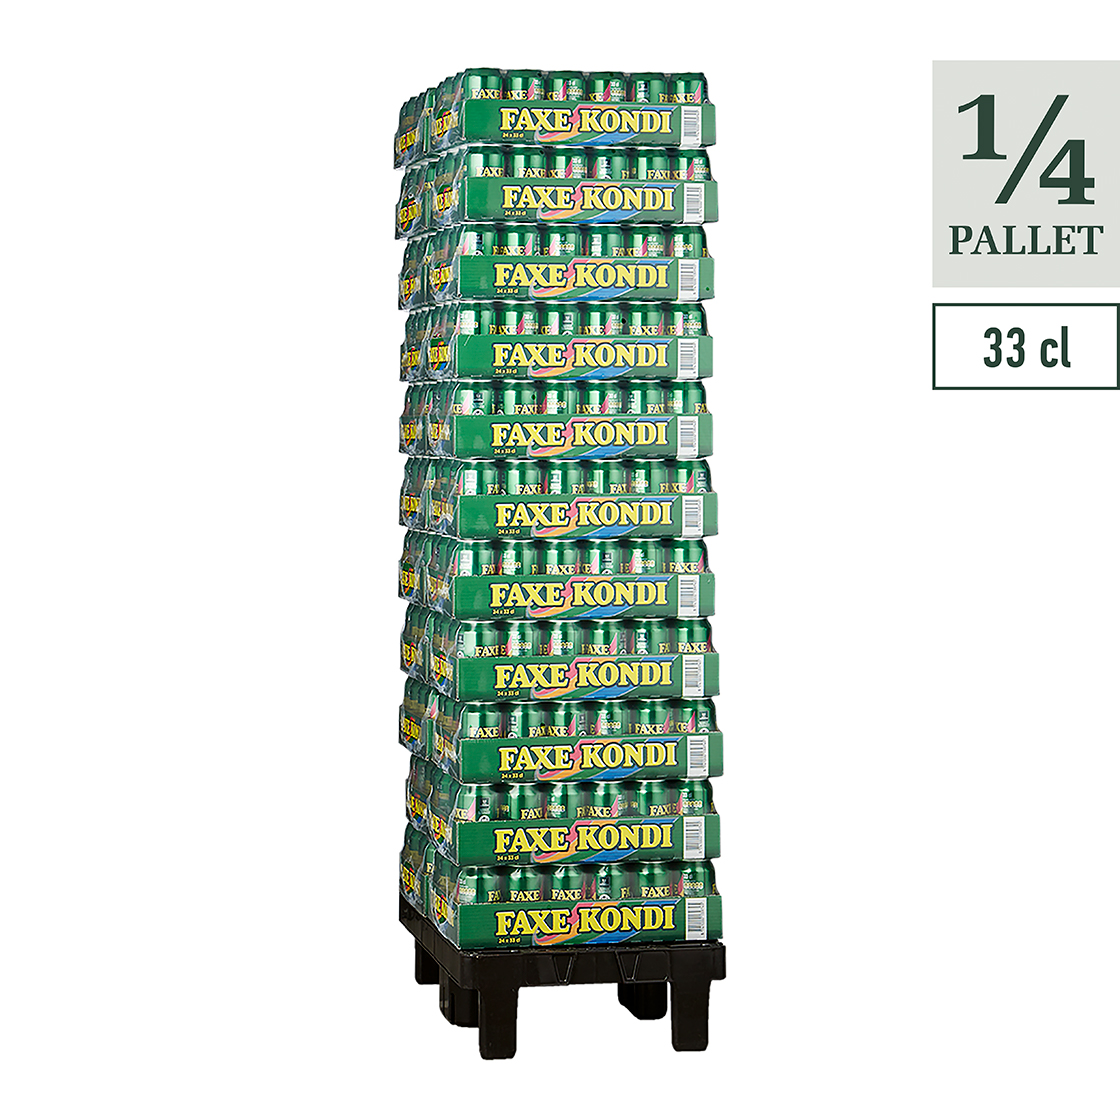 Faxe Kondi 0,33L 88X6-PACK CANS/1/4 PALLET